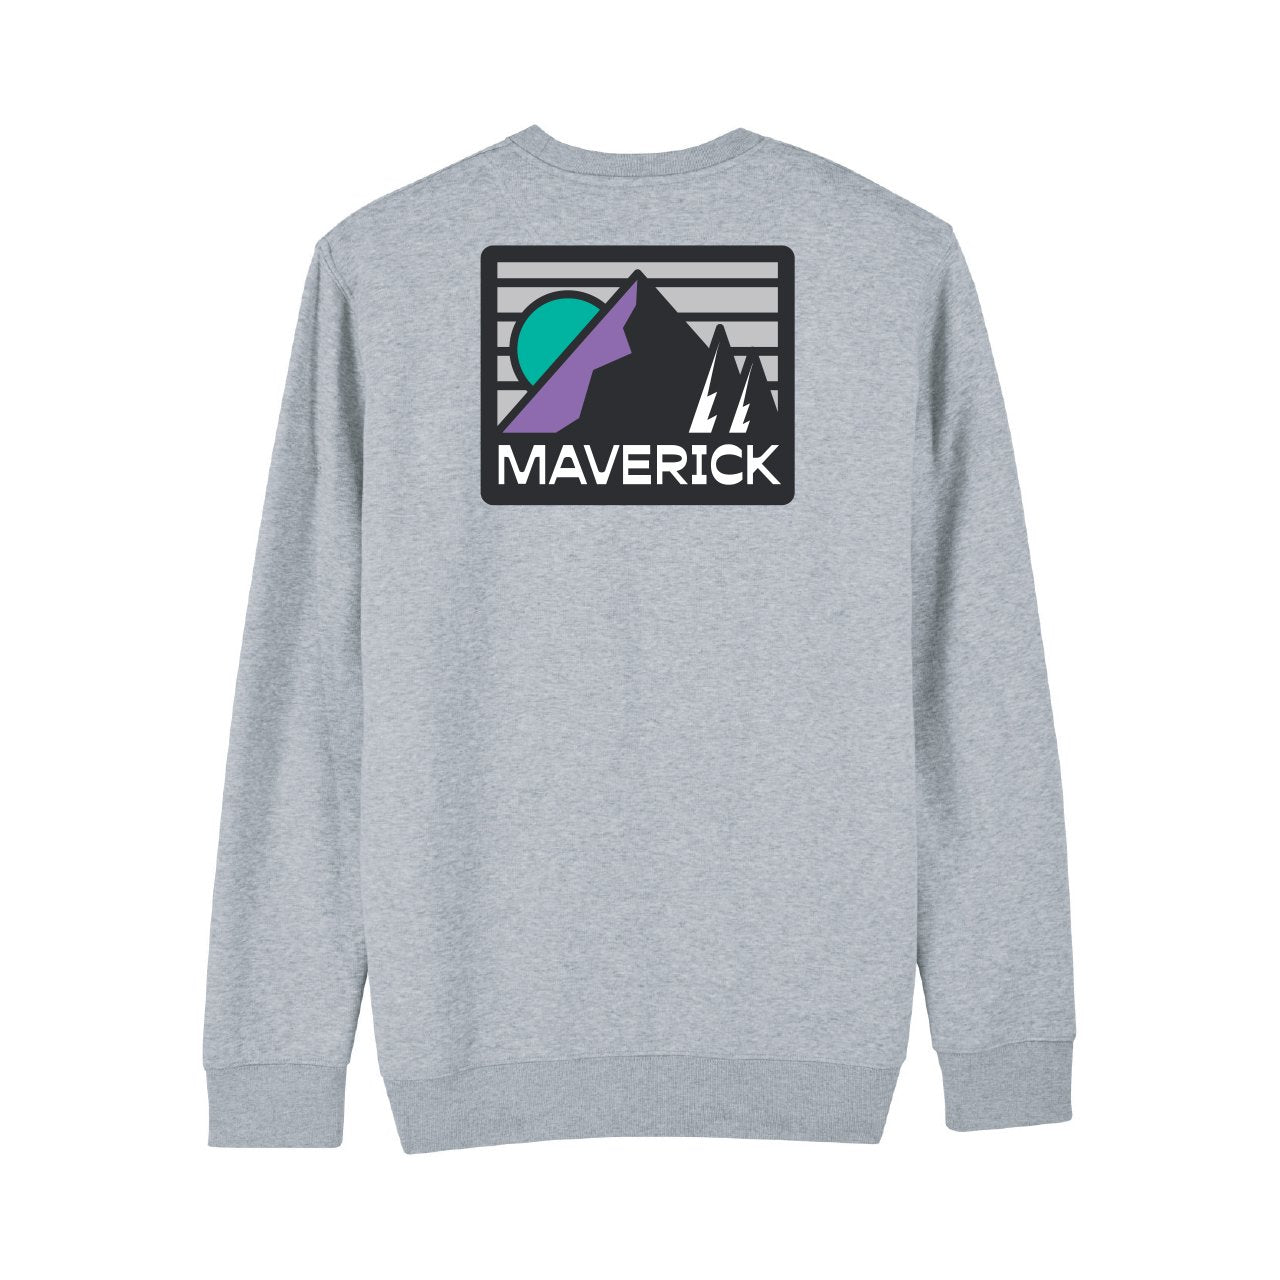 Maverick Apparel  "Midnight Mountains" Sweater Unisex